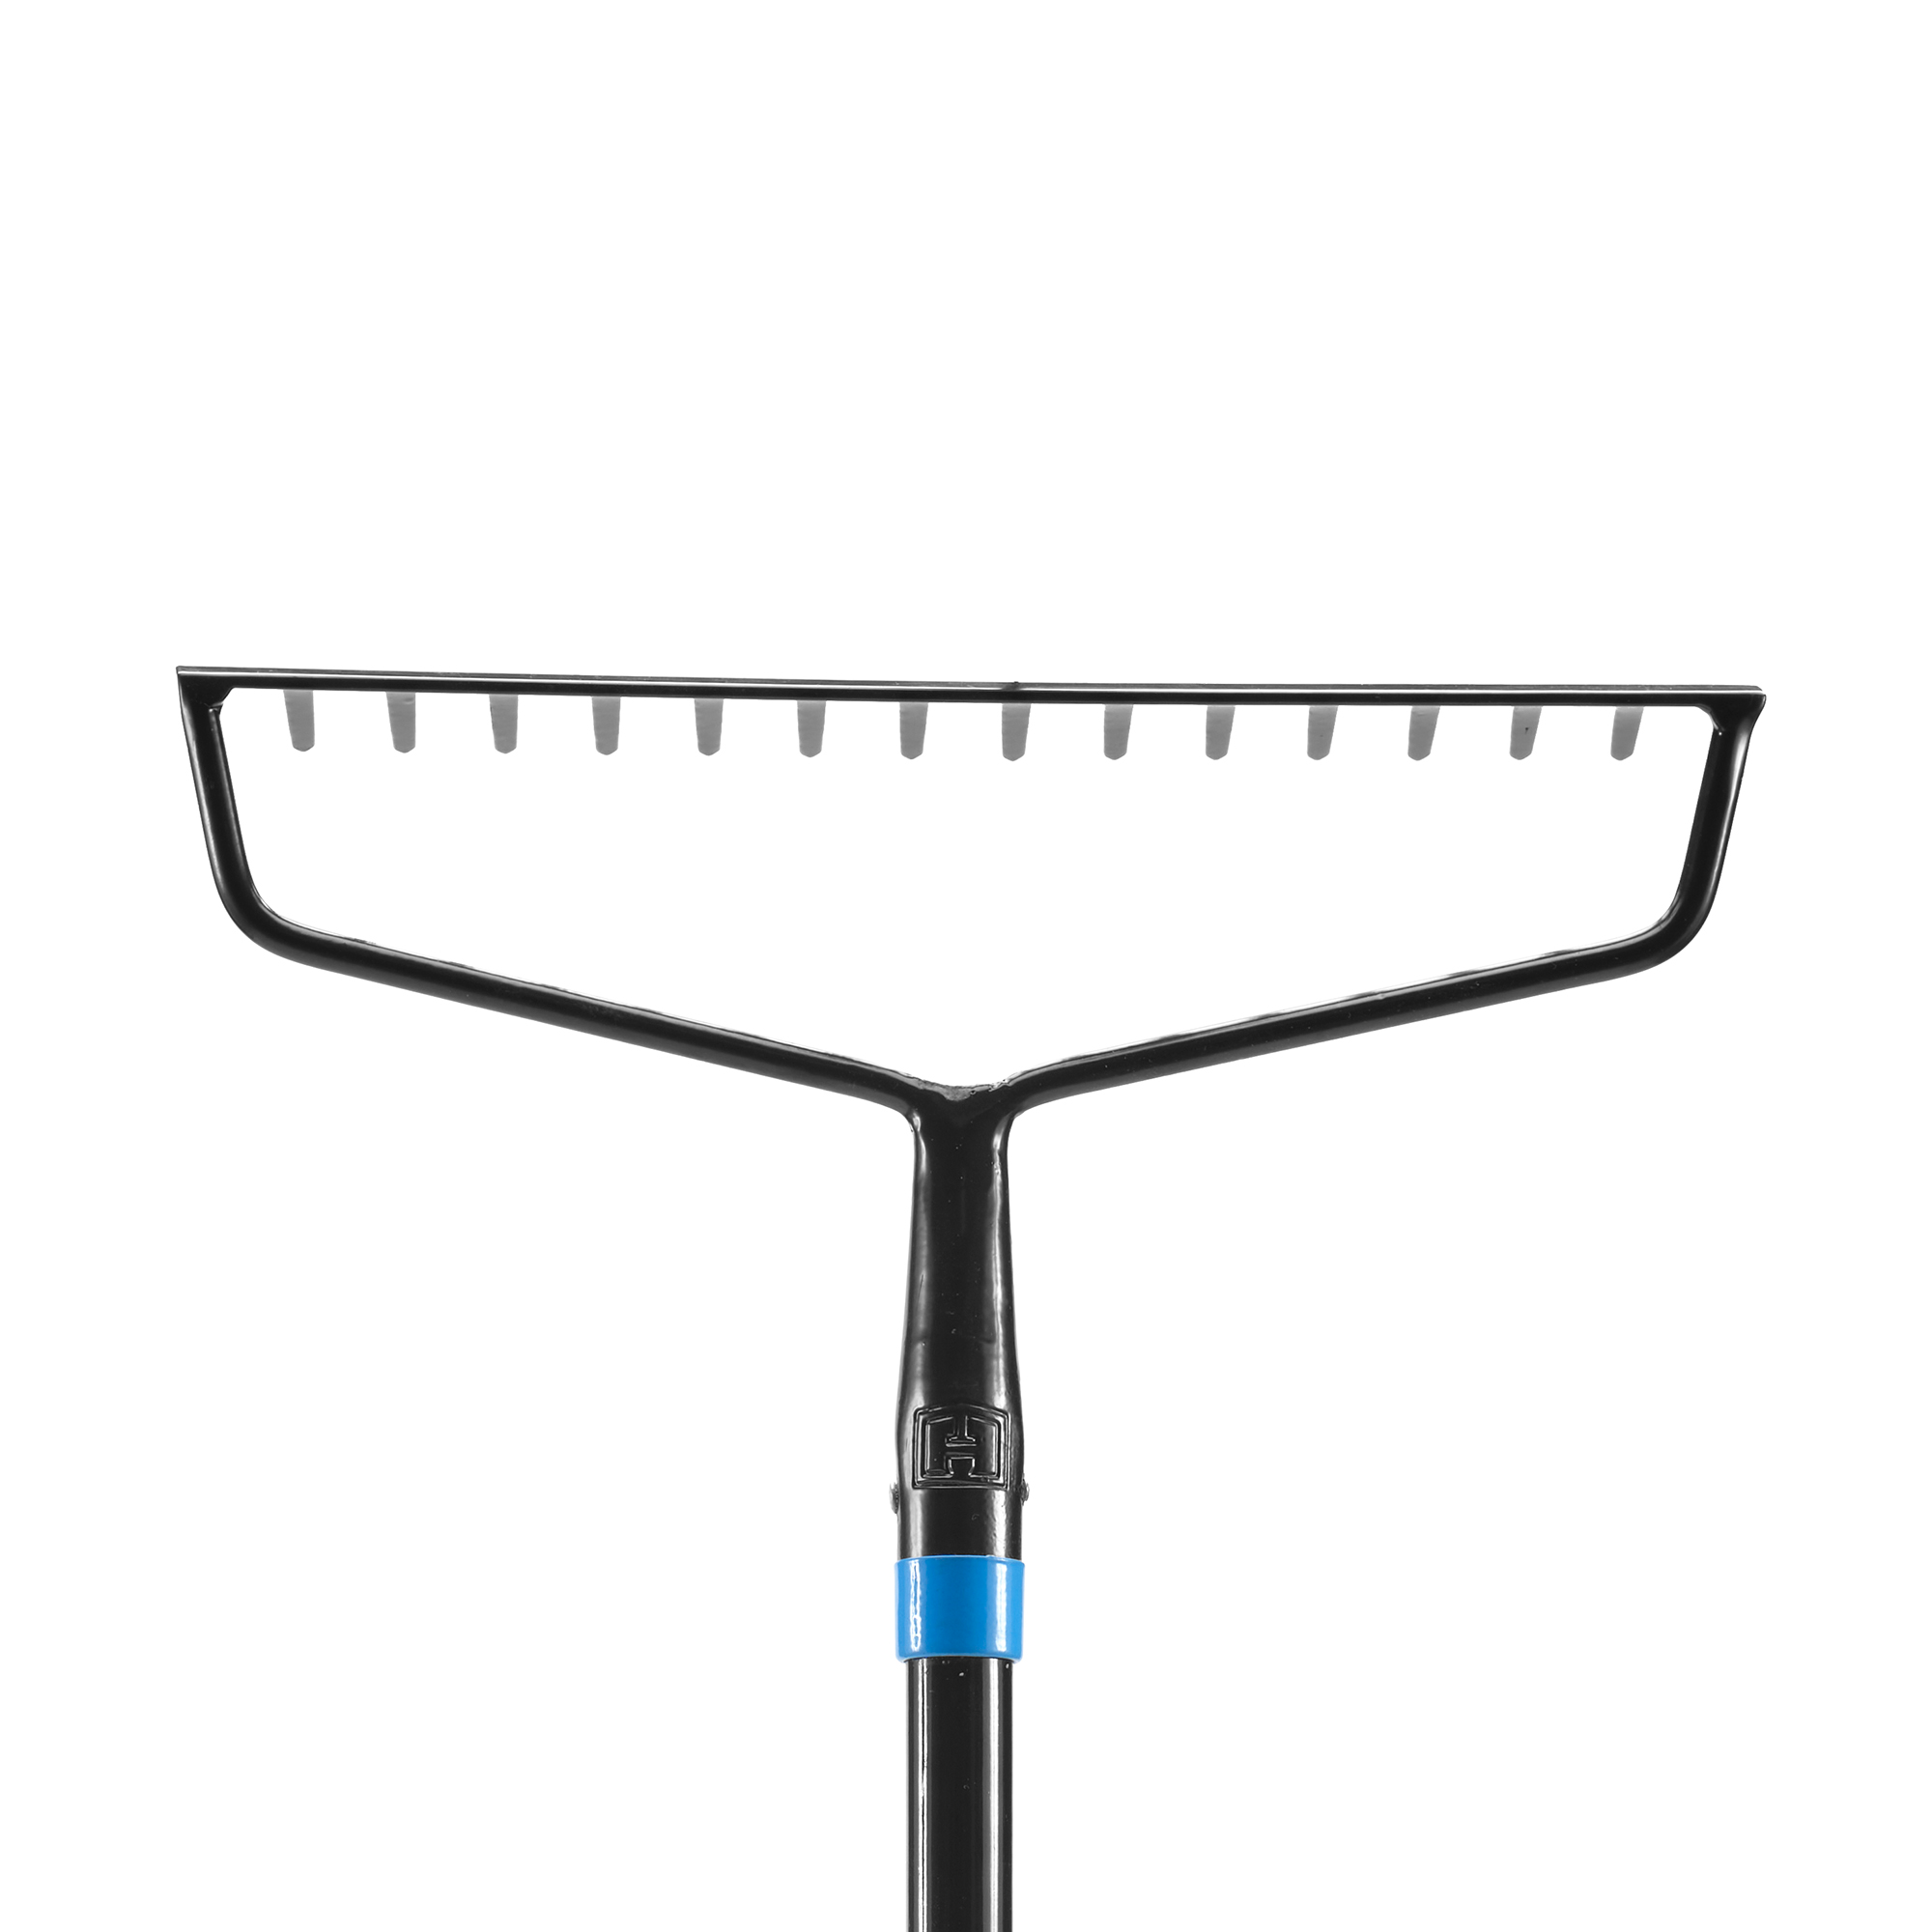 HART 16-Tine Steel Garden Bow Rake, Fiberglass Shaft with Secondary Grip Handle - image 2 of 9